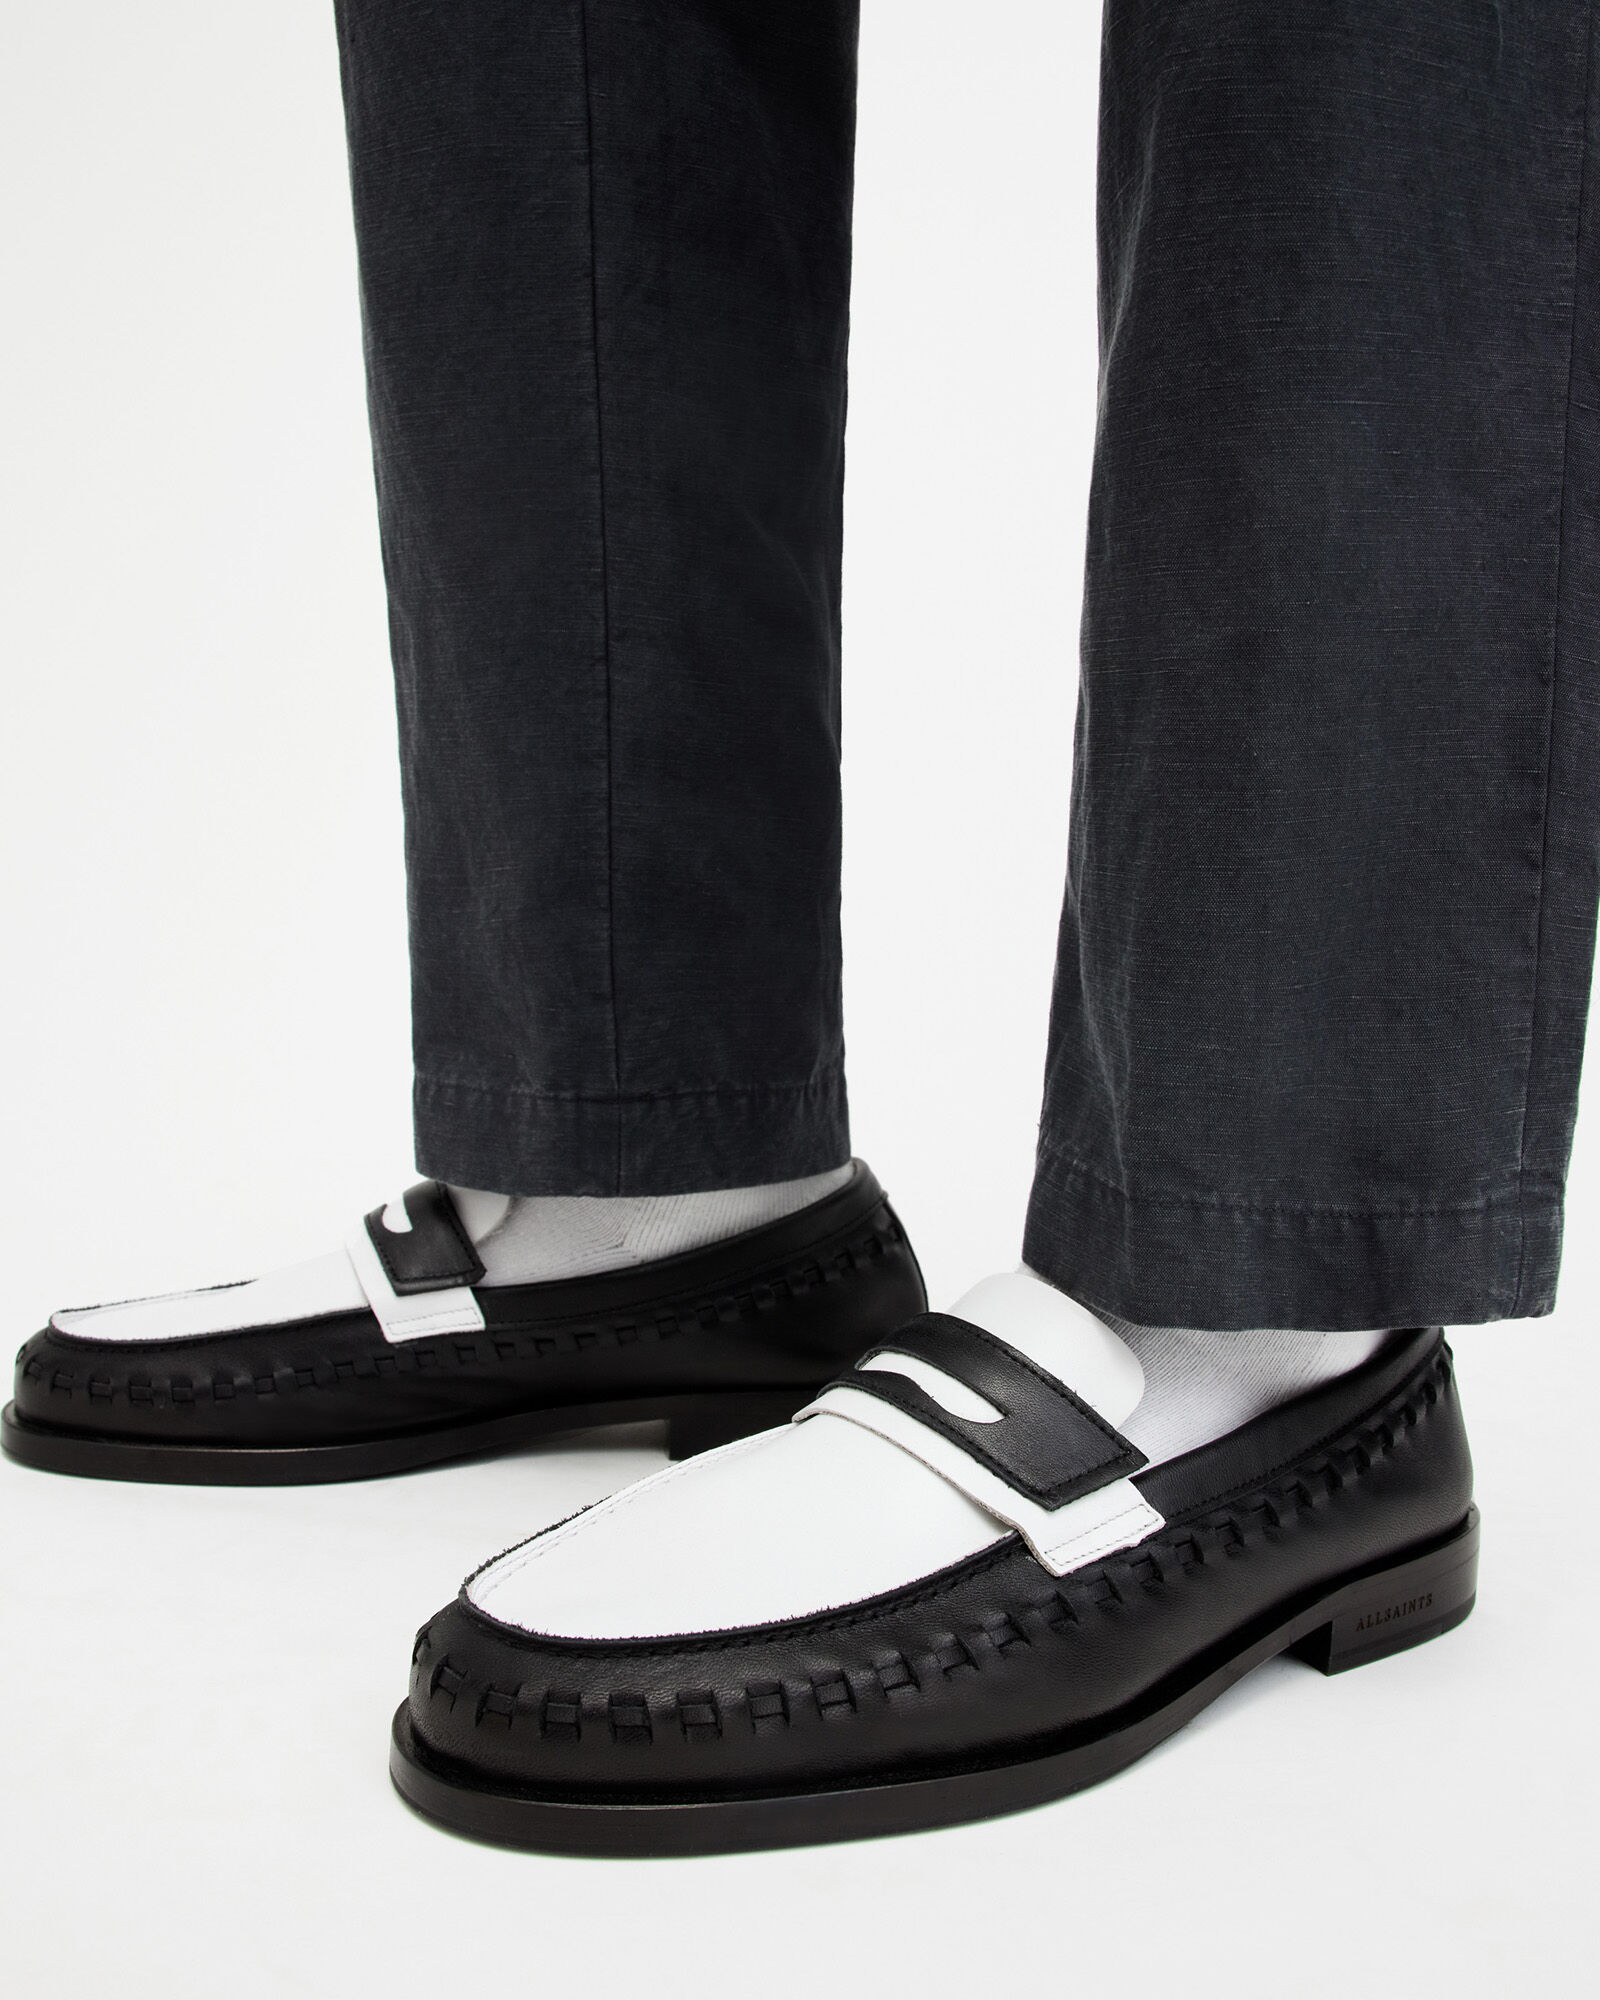 Sammy Leather Loafer Shoes Black/White | ALLSAINTS US